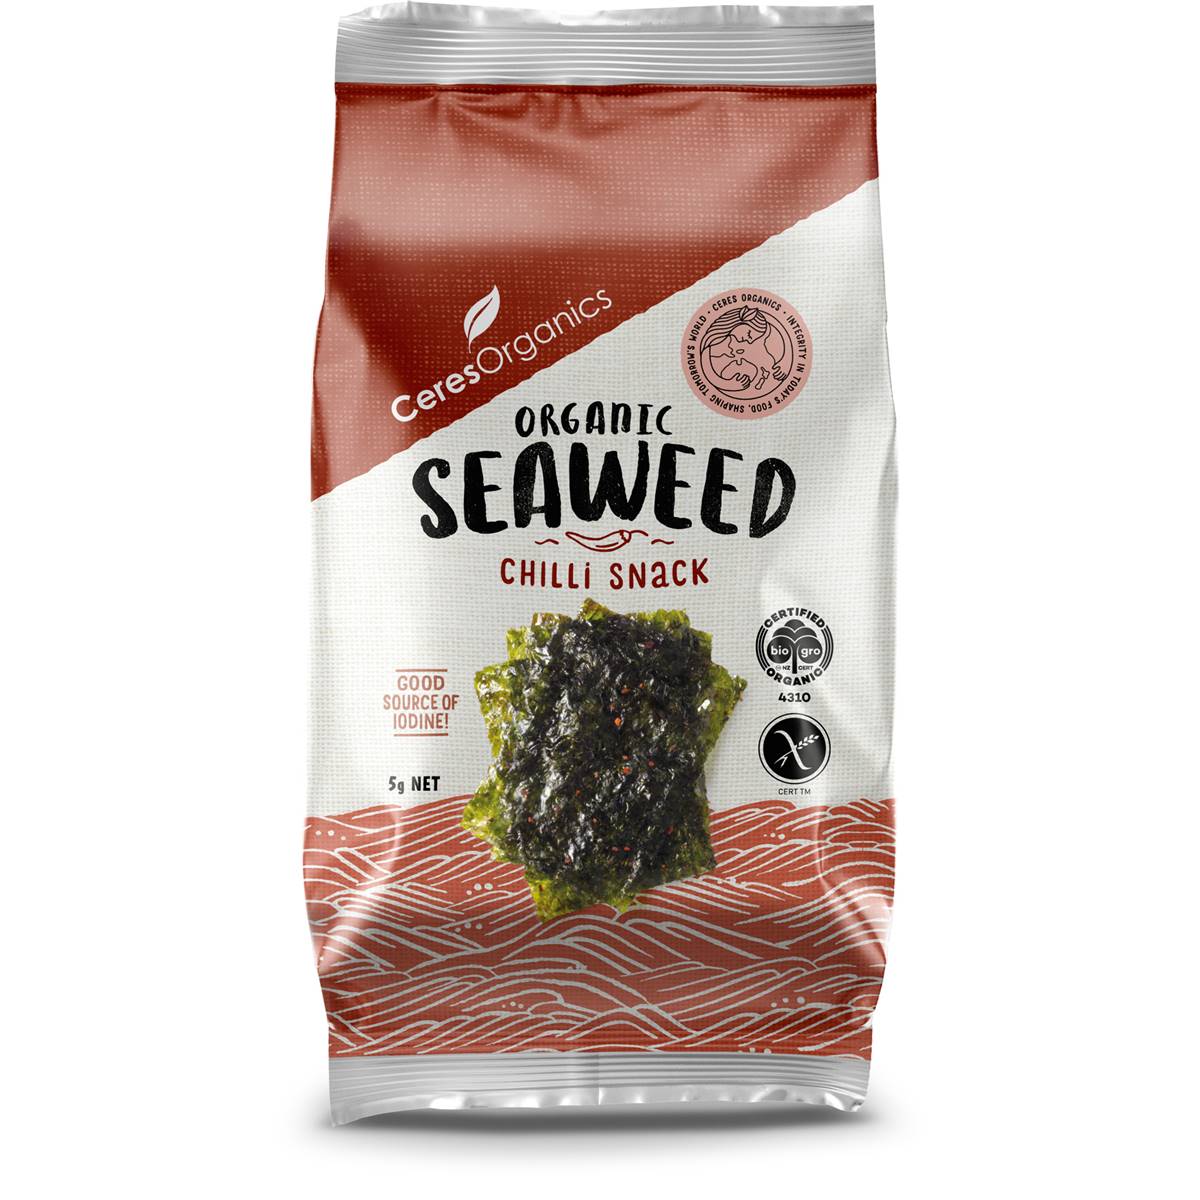 Calories in Ceres Organics Seaweed Chilli Chilli